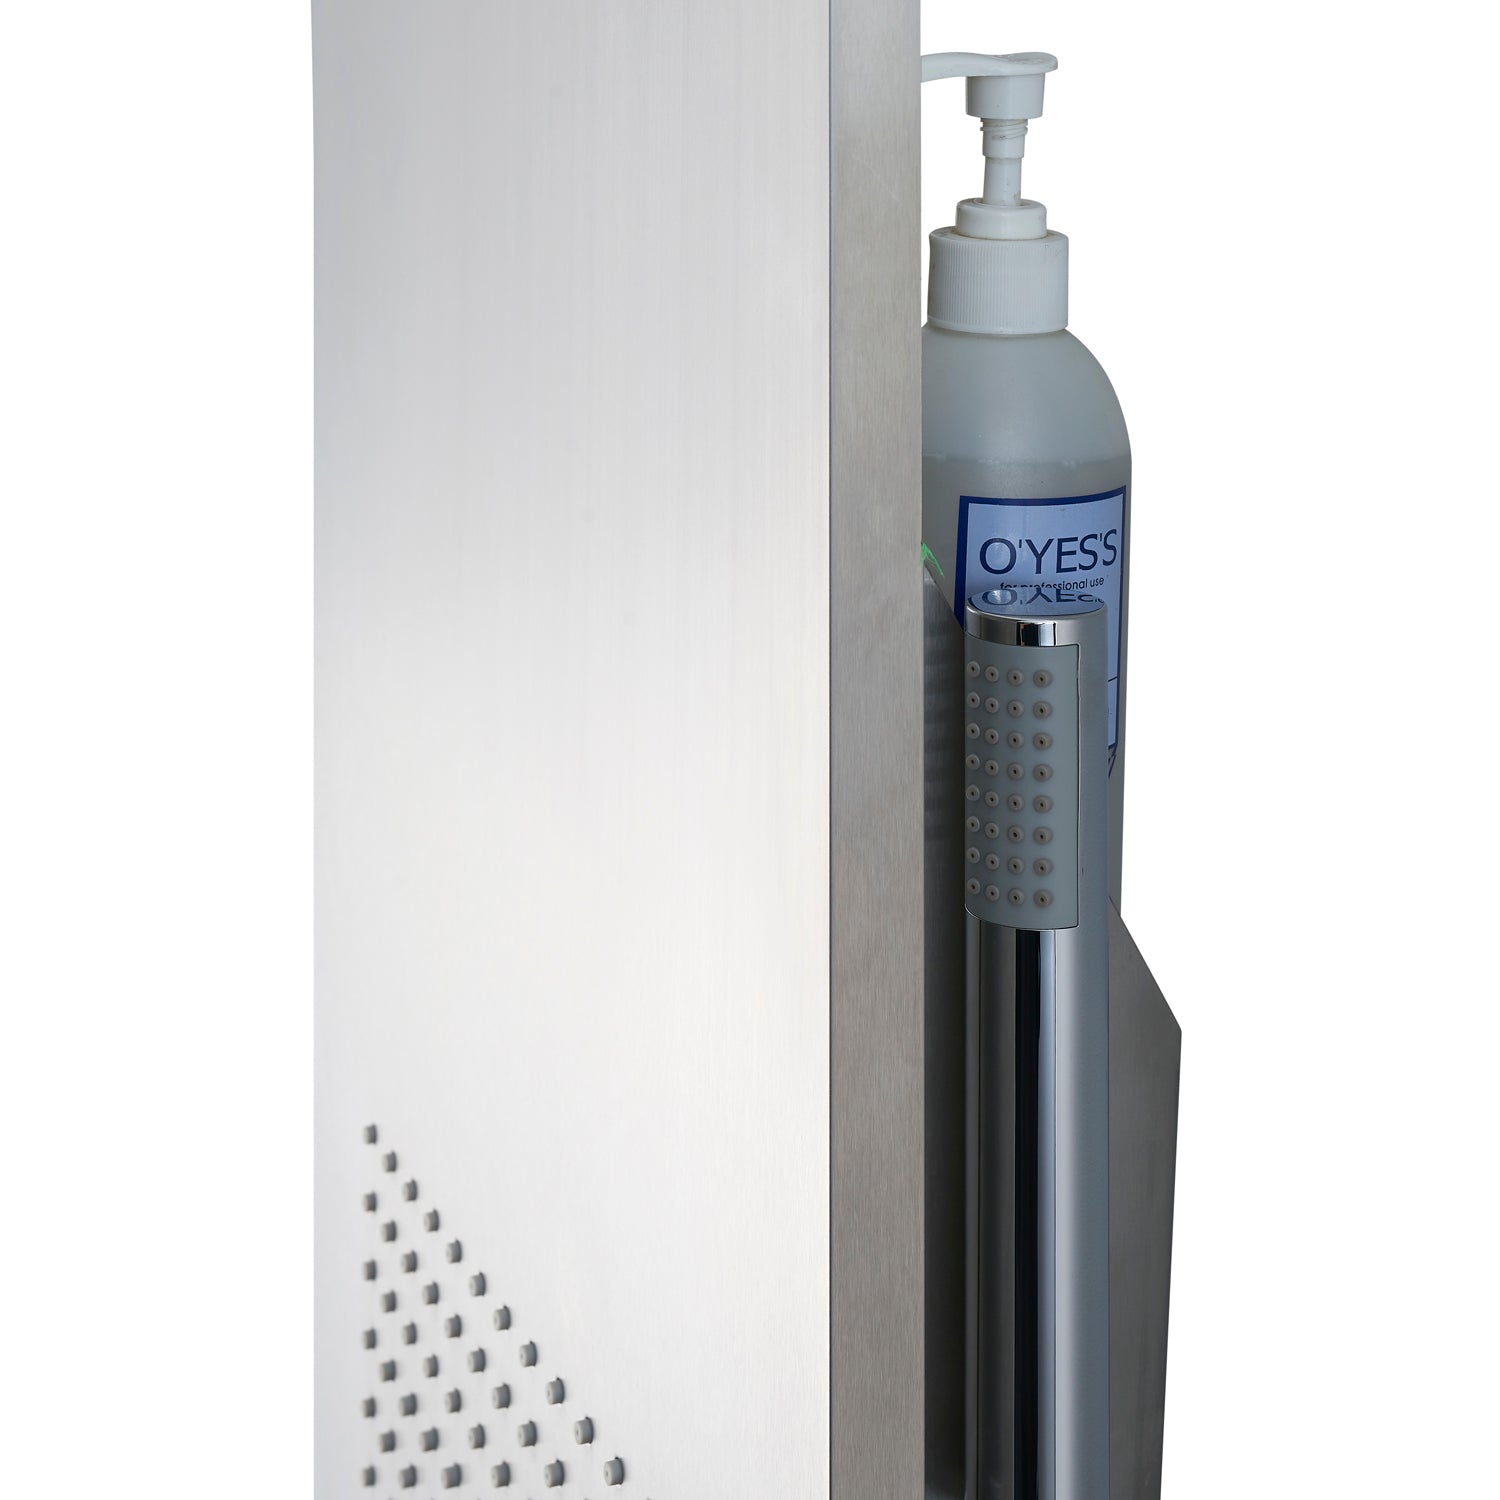 DAX Brushed Stainless Steel Shower Panel Pressure Balance Valve Body Jets Hand Shower (DAX-211-BN)